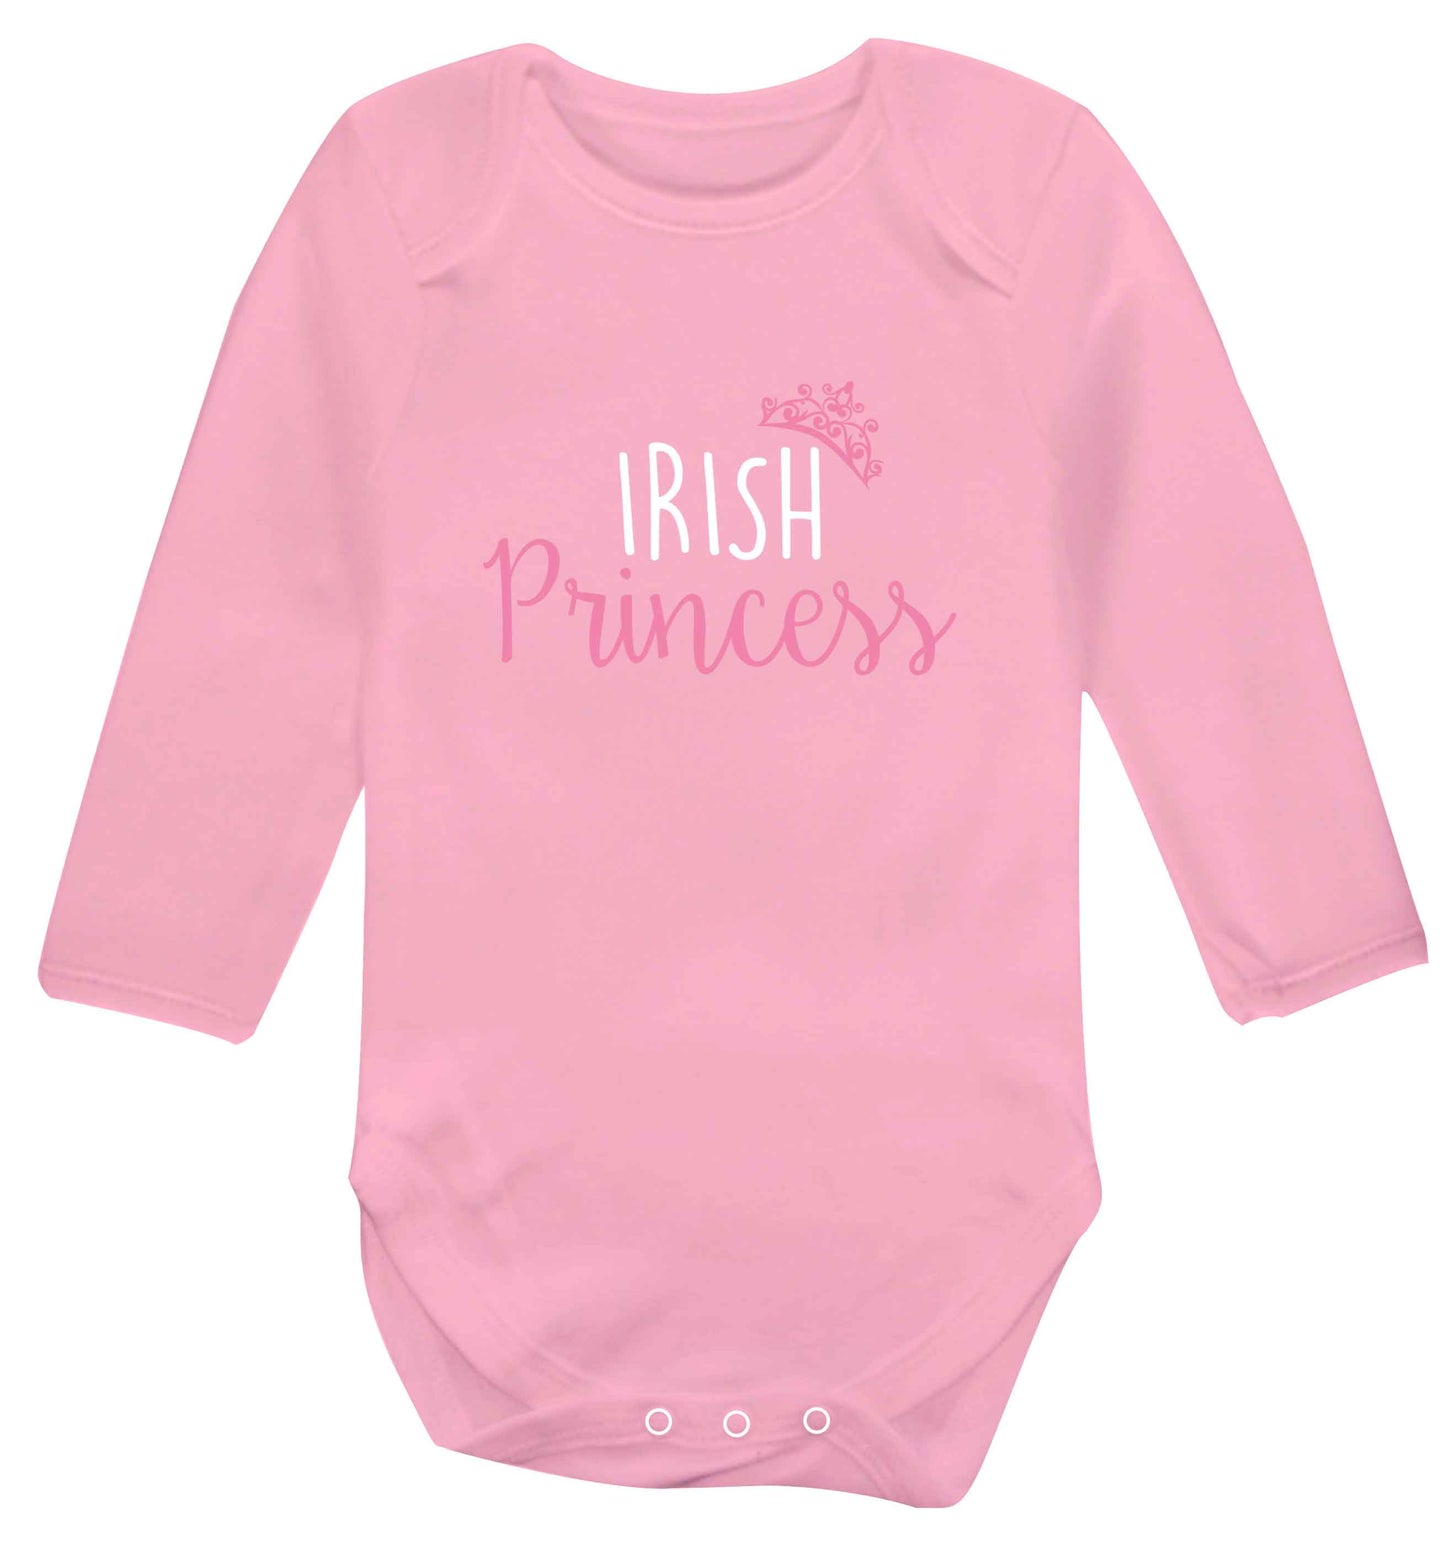 Irish princess baby vest long sleeved pale pink 6-12 months